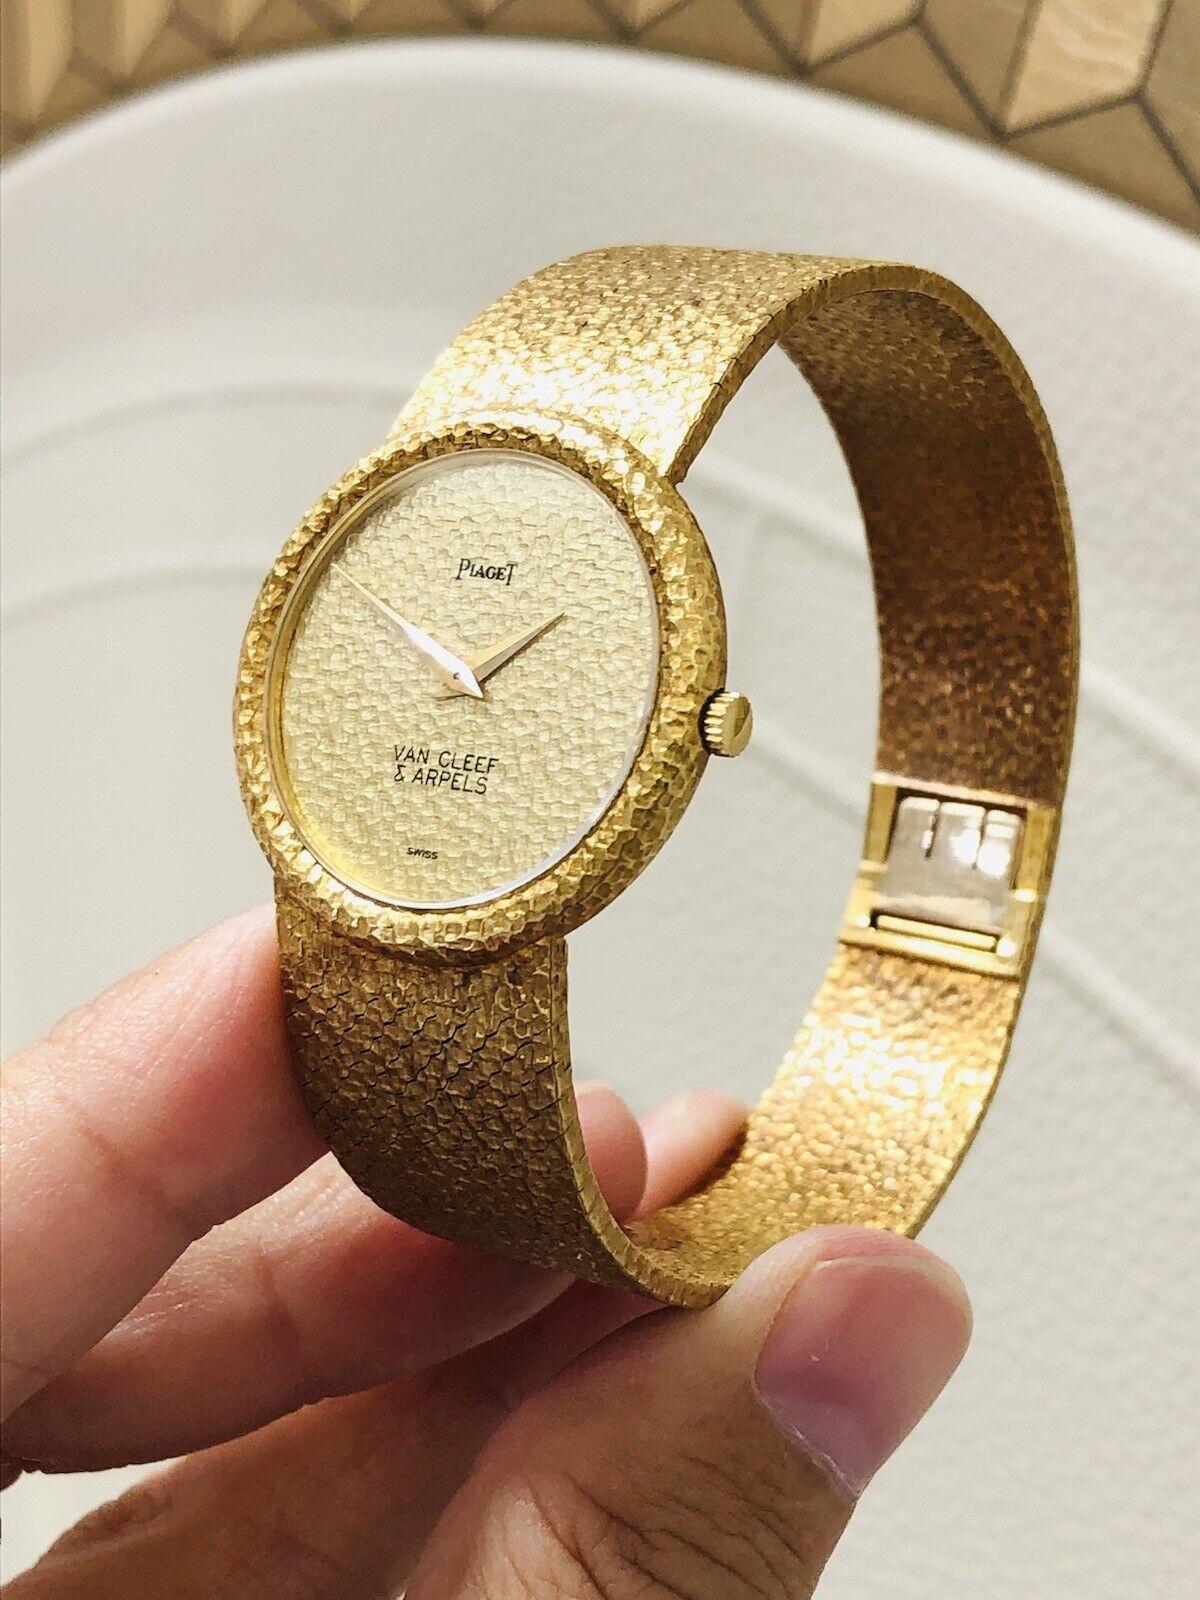 VAN CLEEF & ARPELS PIAGET 18k Yellow Gold Watch Circa 1970s Men's Size For Sale 6